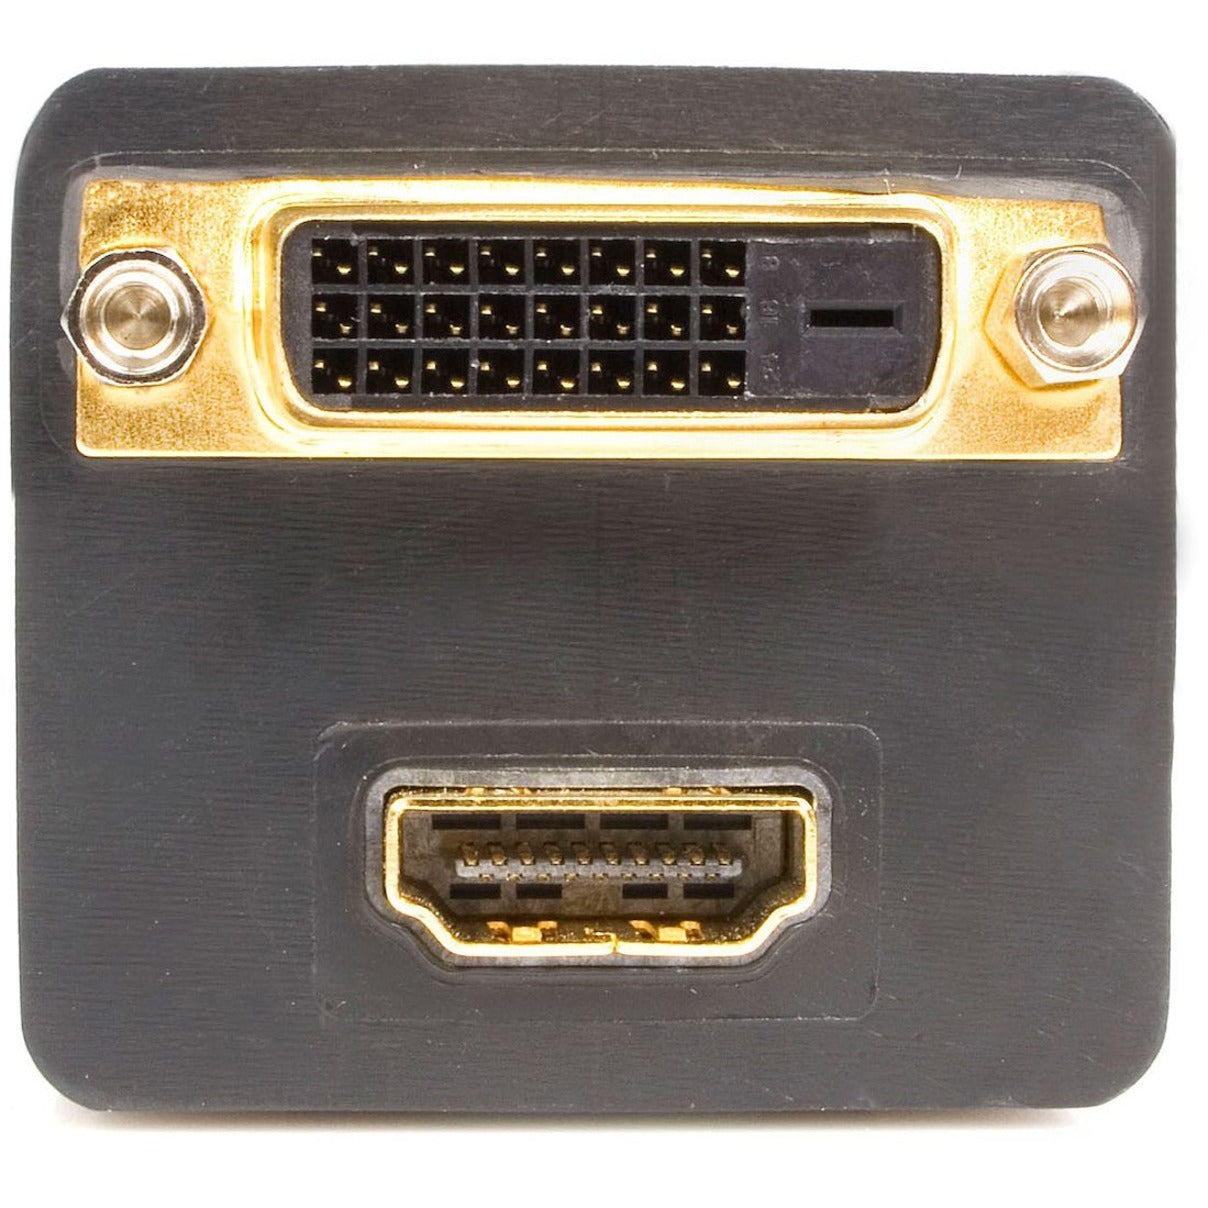 StarTech.com DVISPL1DH DVI-D to DVI-D & HDMI Splitter Cable - M/F, 1 ft Video Cable